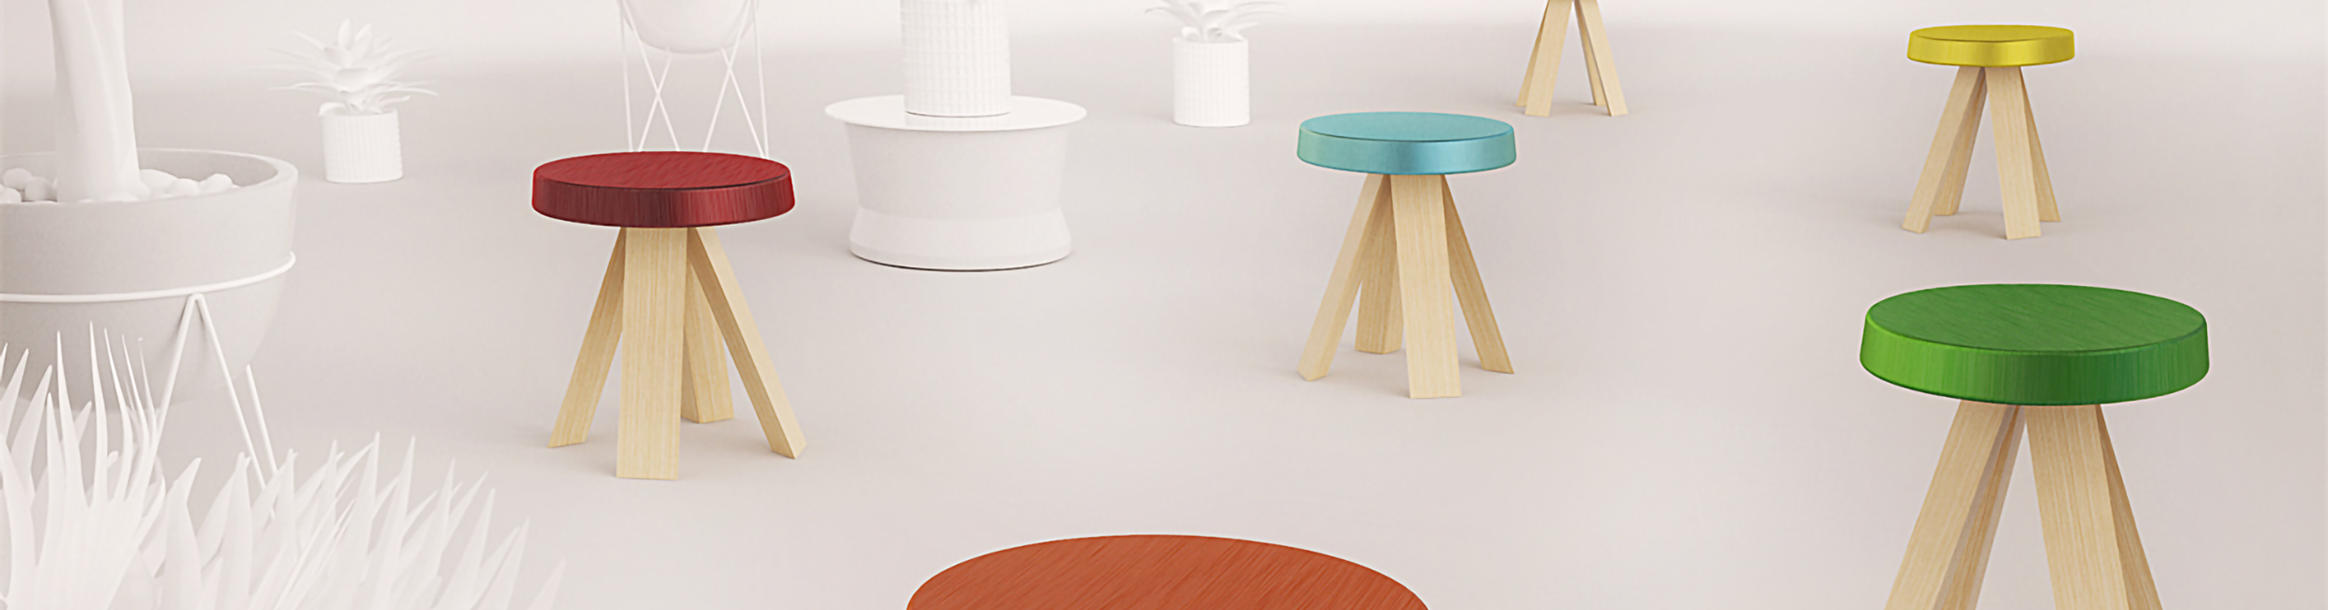 Asterisk stool project header image